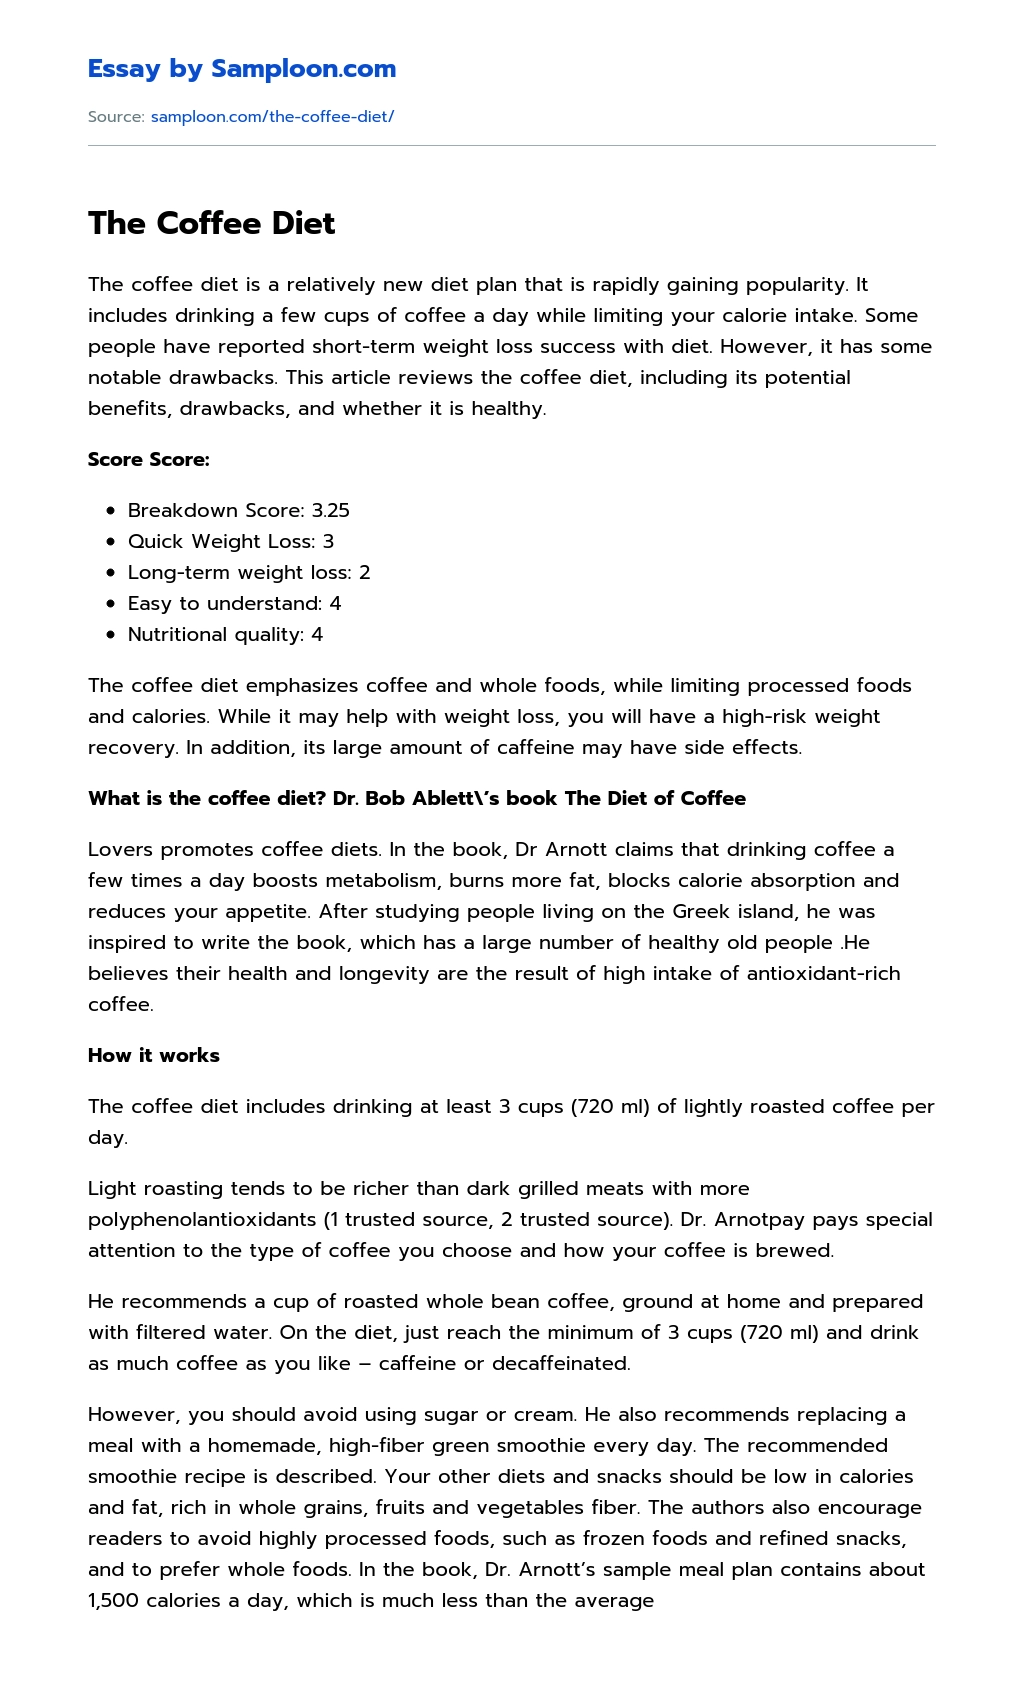 The Coffee Diet essay